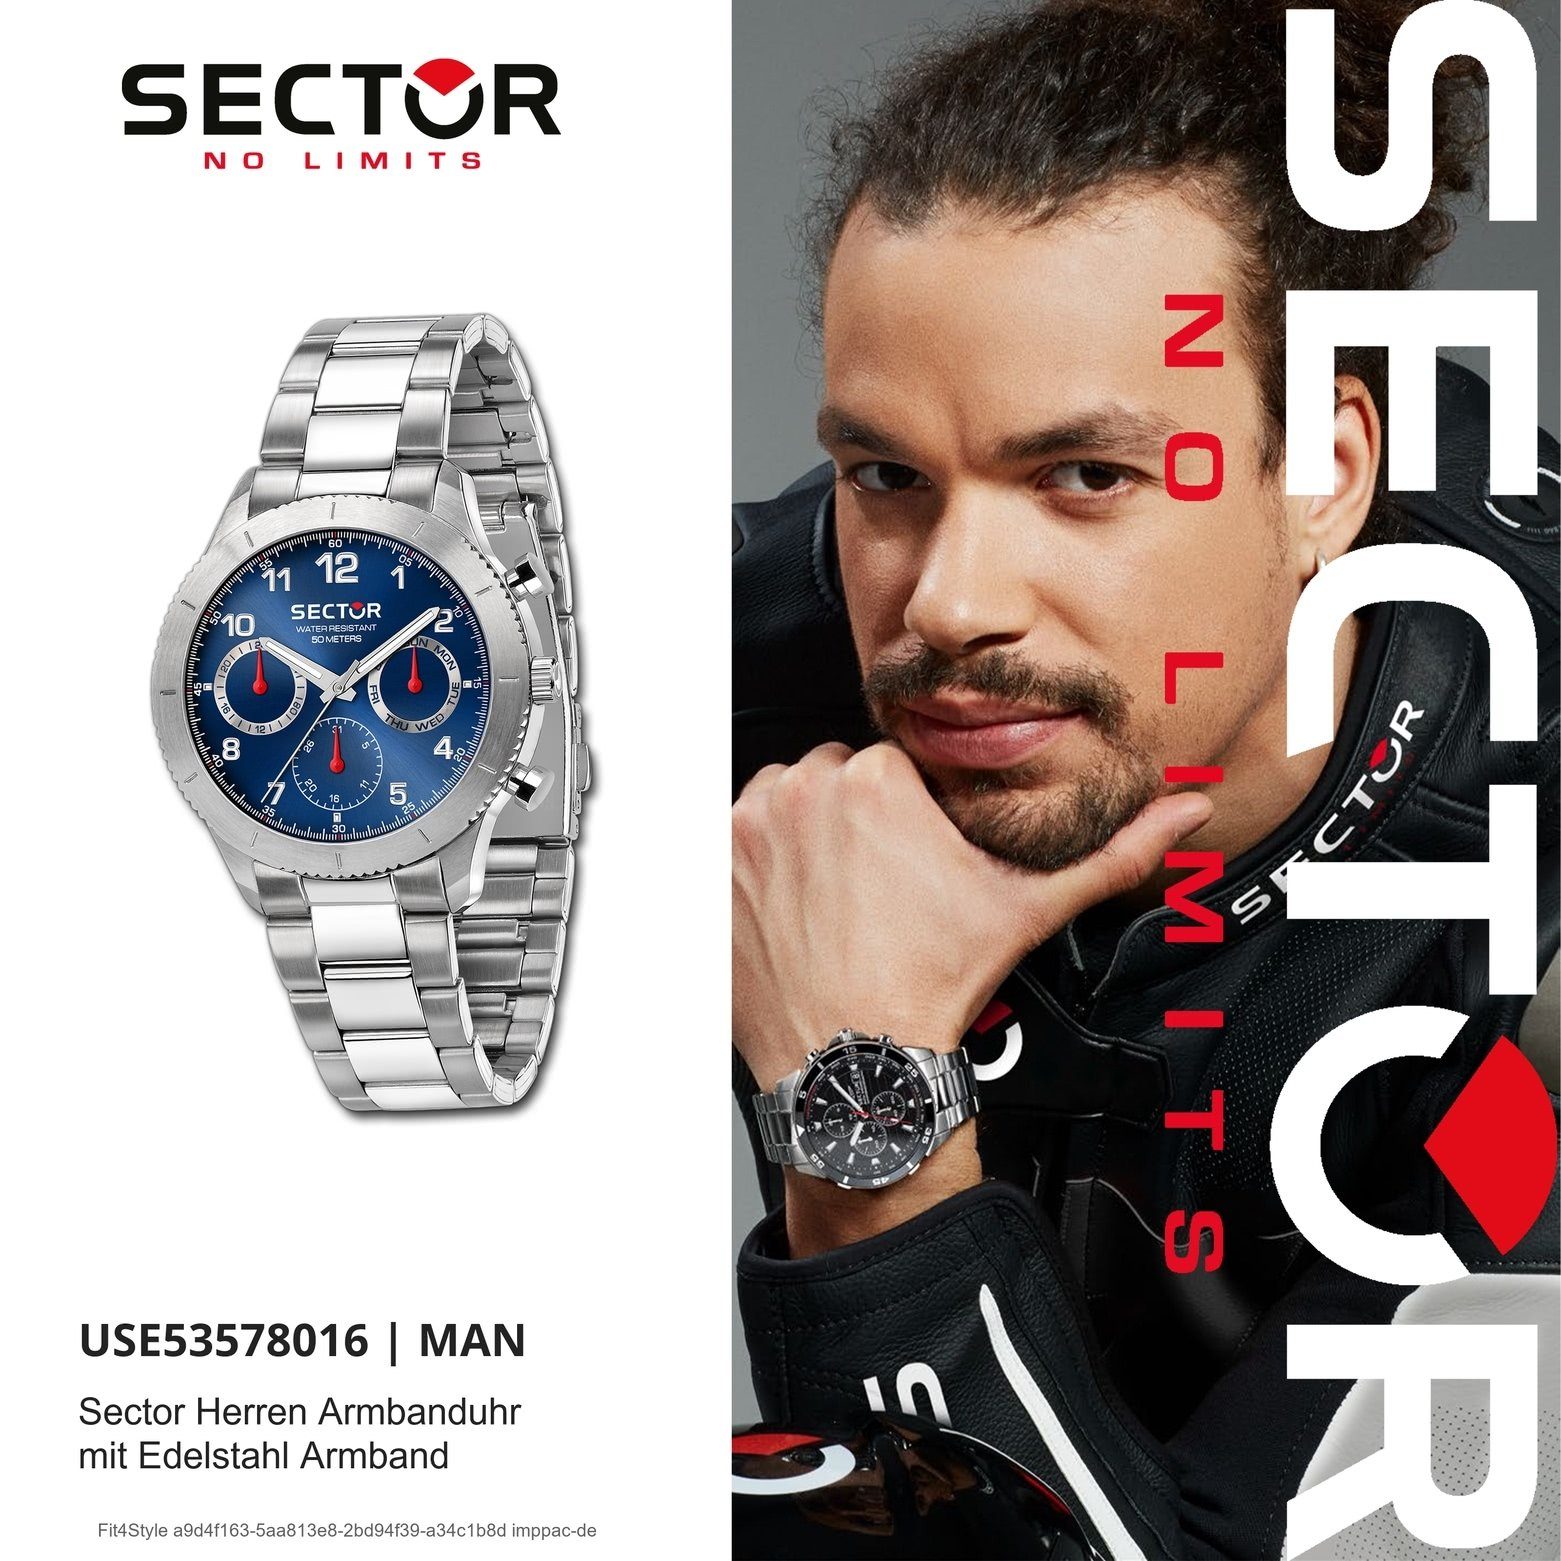 Multifunktionsuhr Sector Armbanduhr (ca. Herren Herrenuhr Fashion-Style Edelstahlarmband, groß rund, Sector 45mm), Multifunkt,